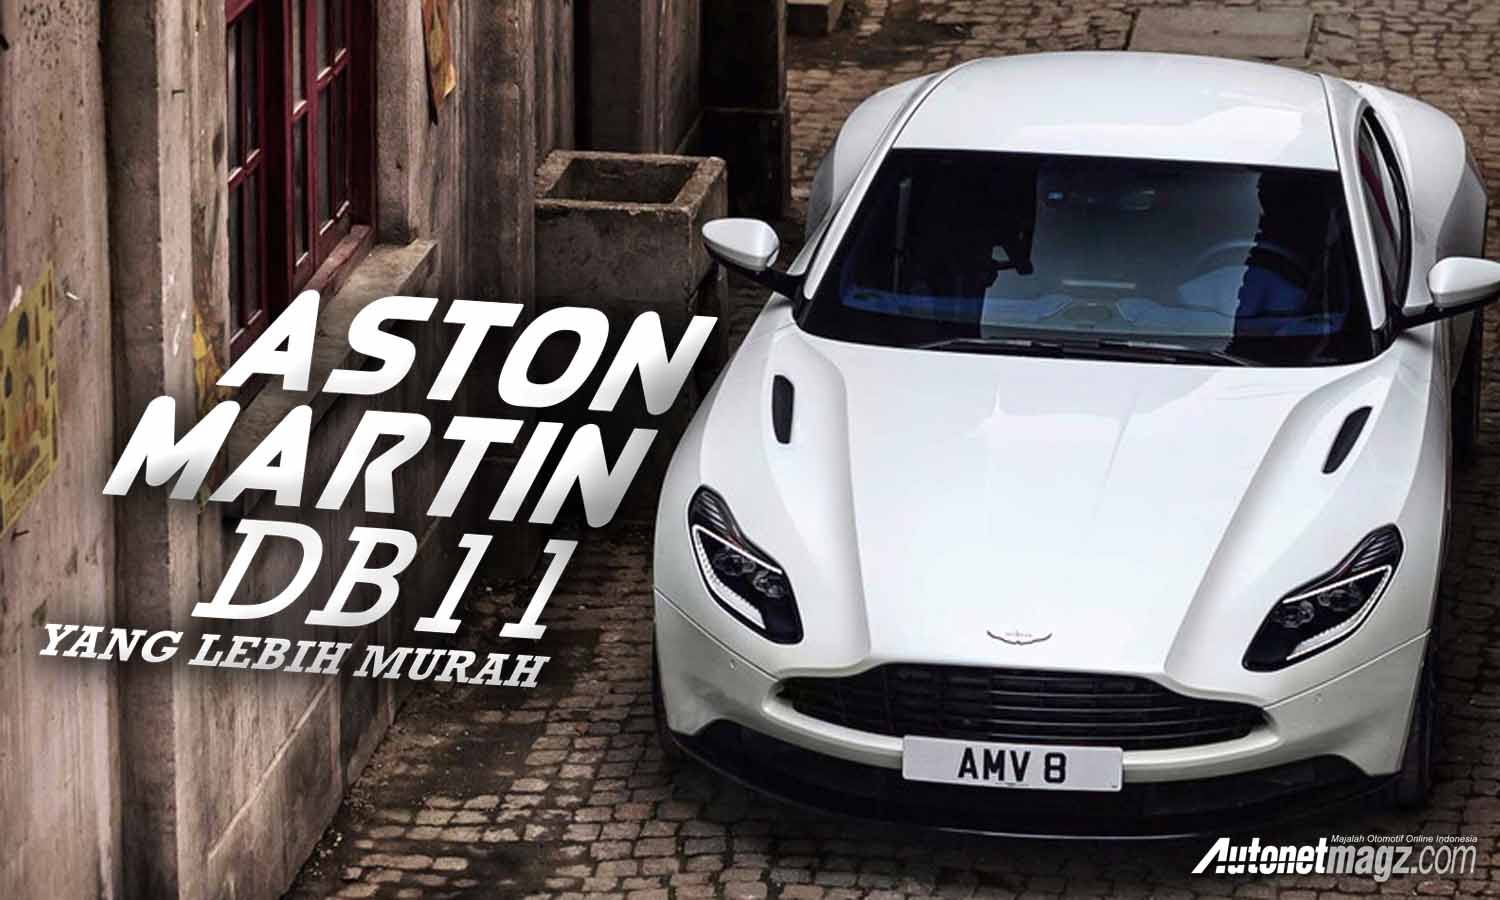 Aston Martin, Aston Martin DB11 4800 V8 cover: Aston Martin Rilis Varian Murah DB11, Pakai mesin AMG